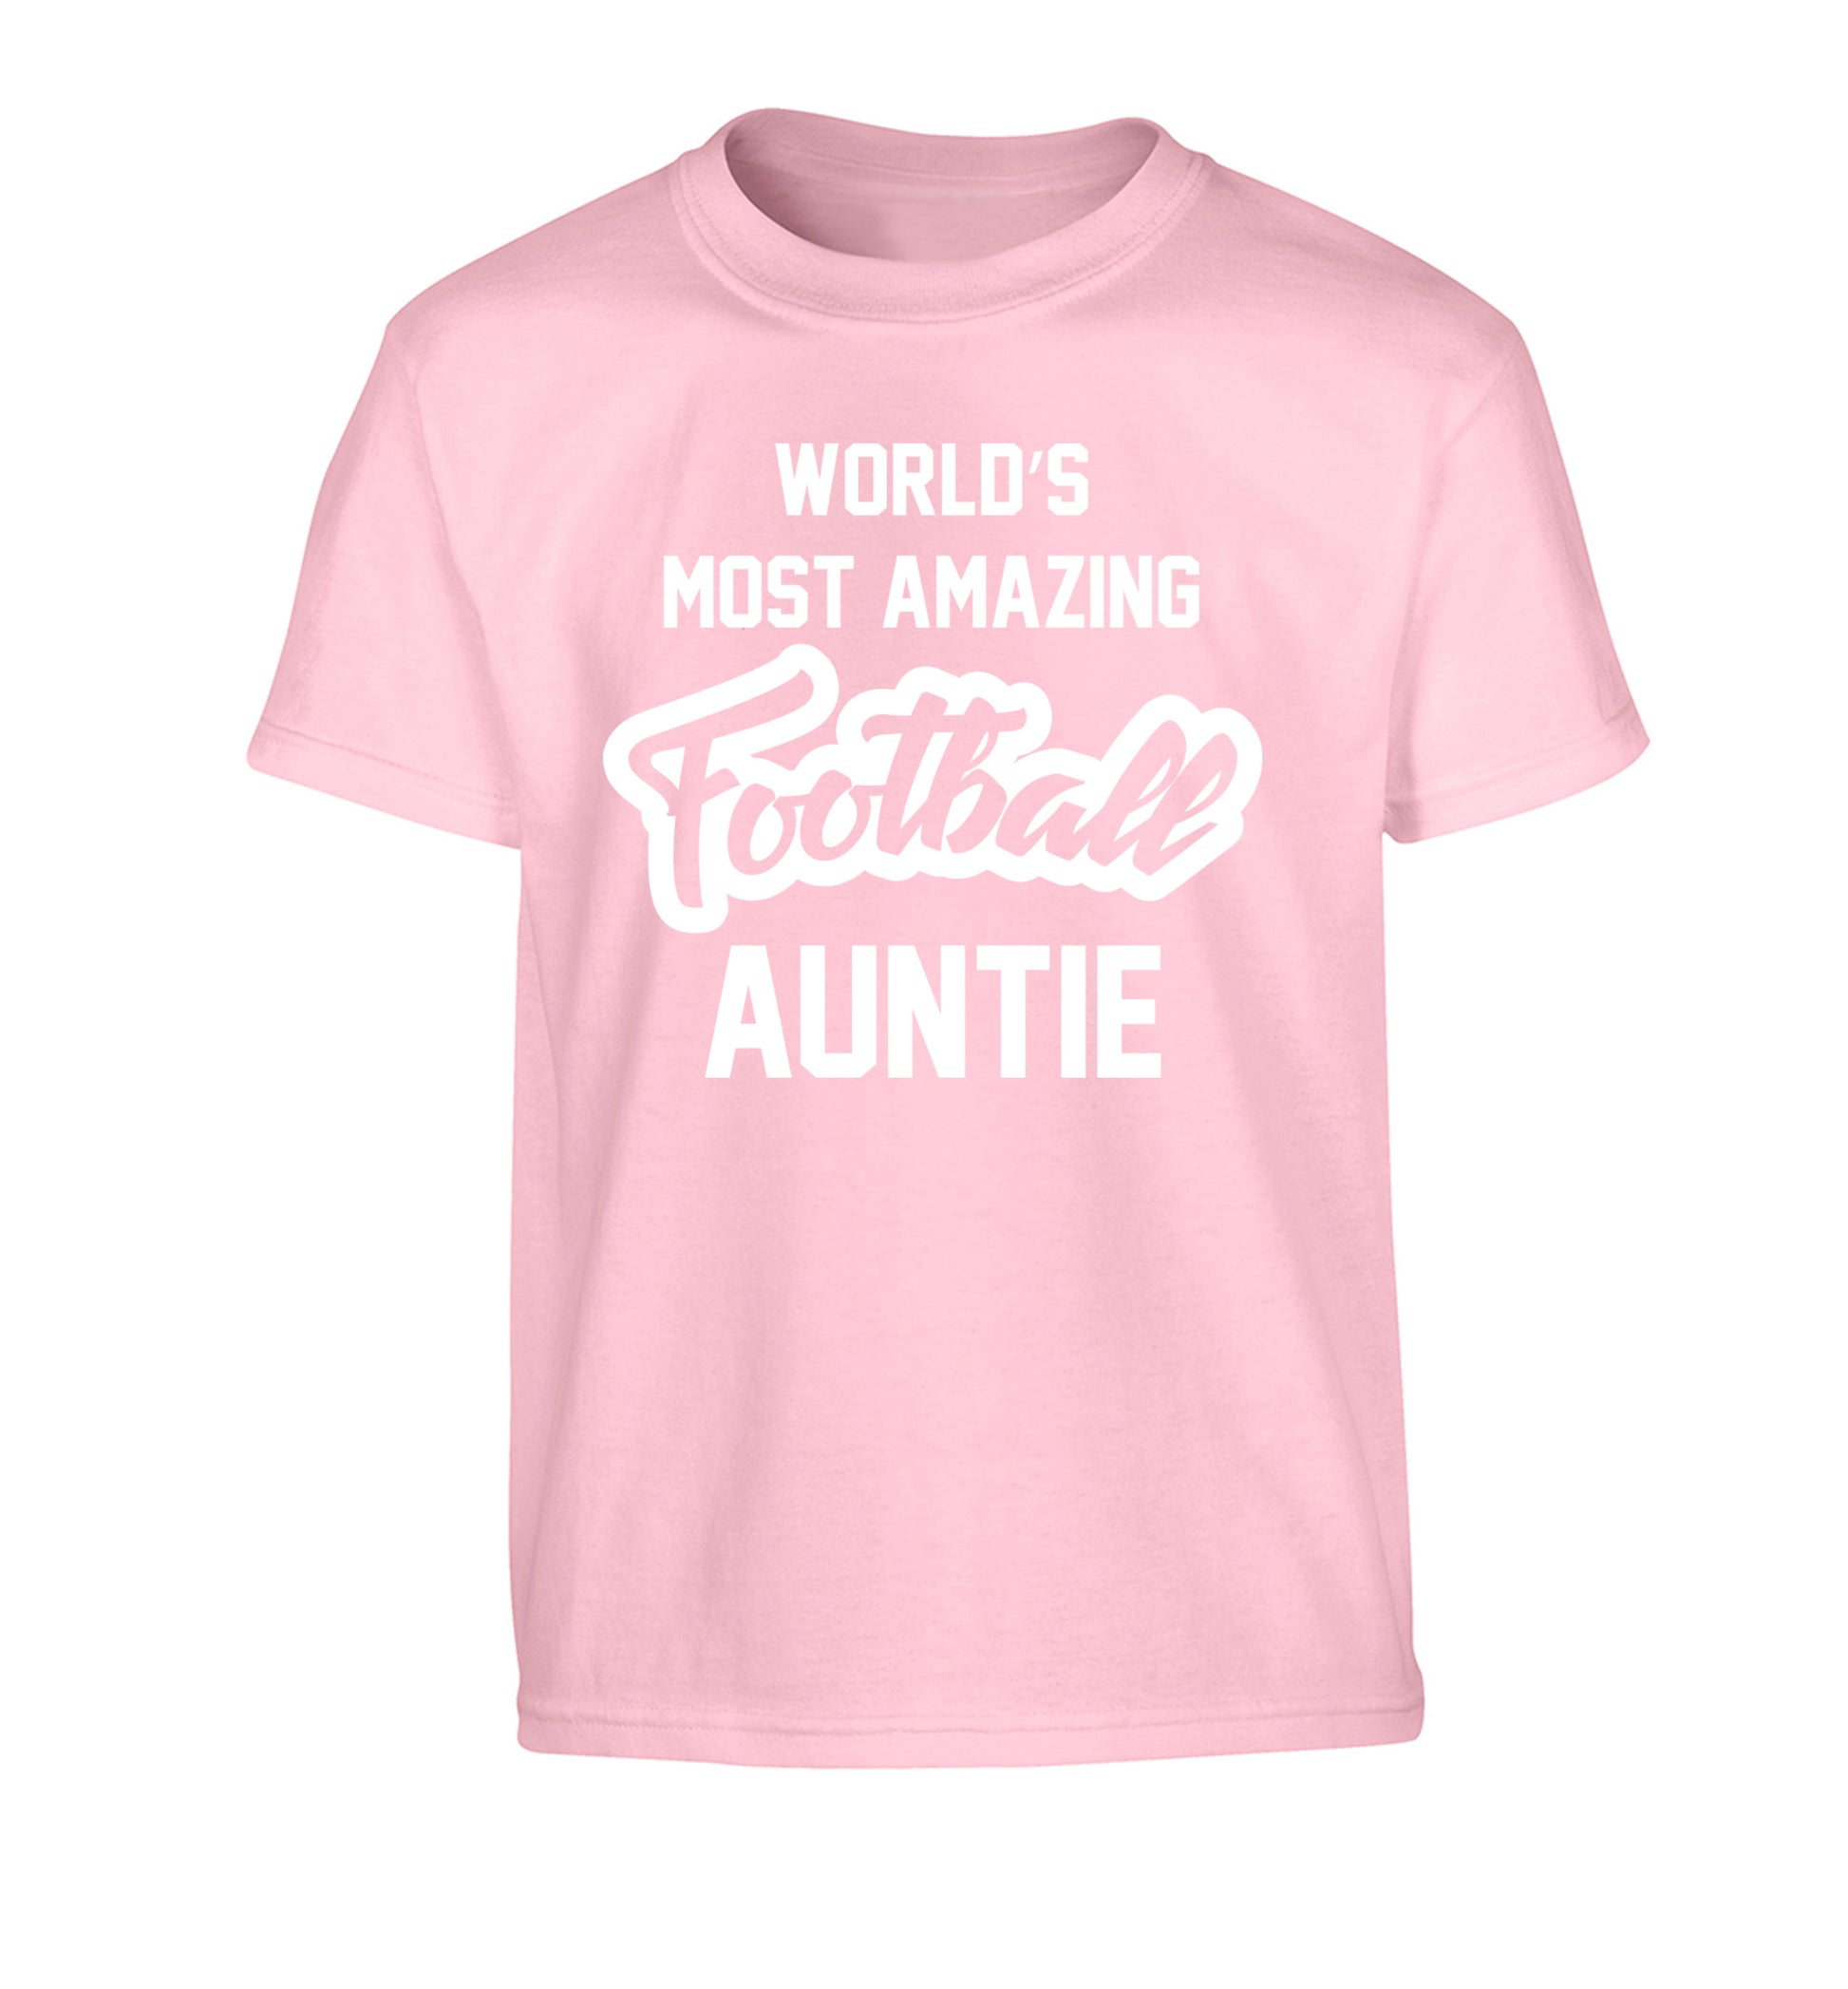 Worlds most amazing football auntie Children's light pink Tshirt 12-14 Years